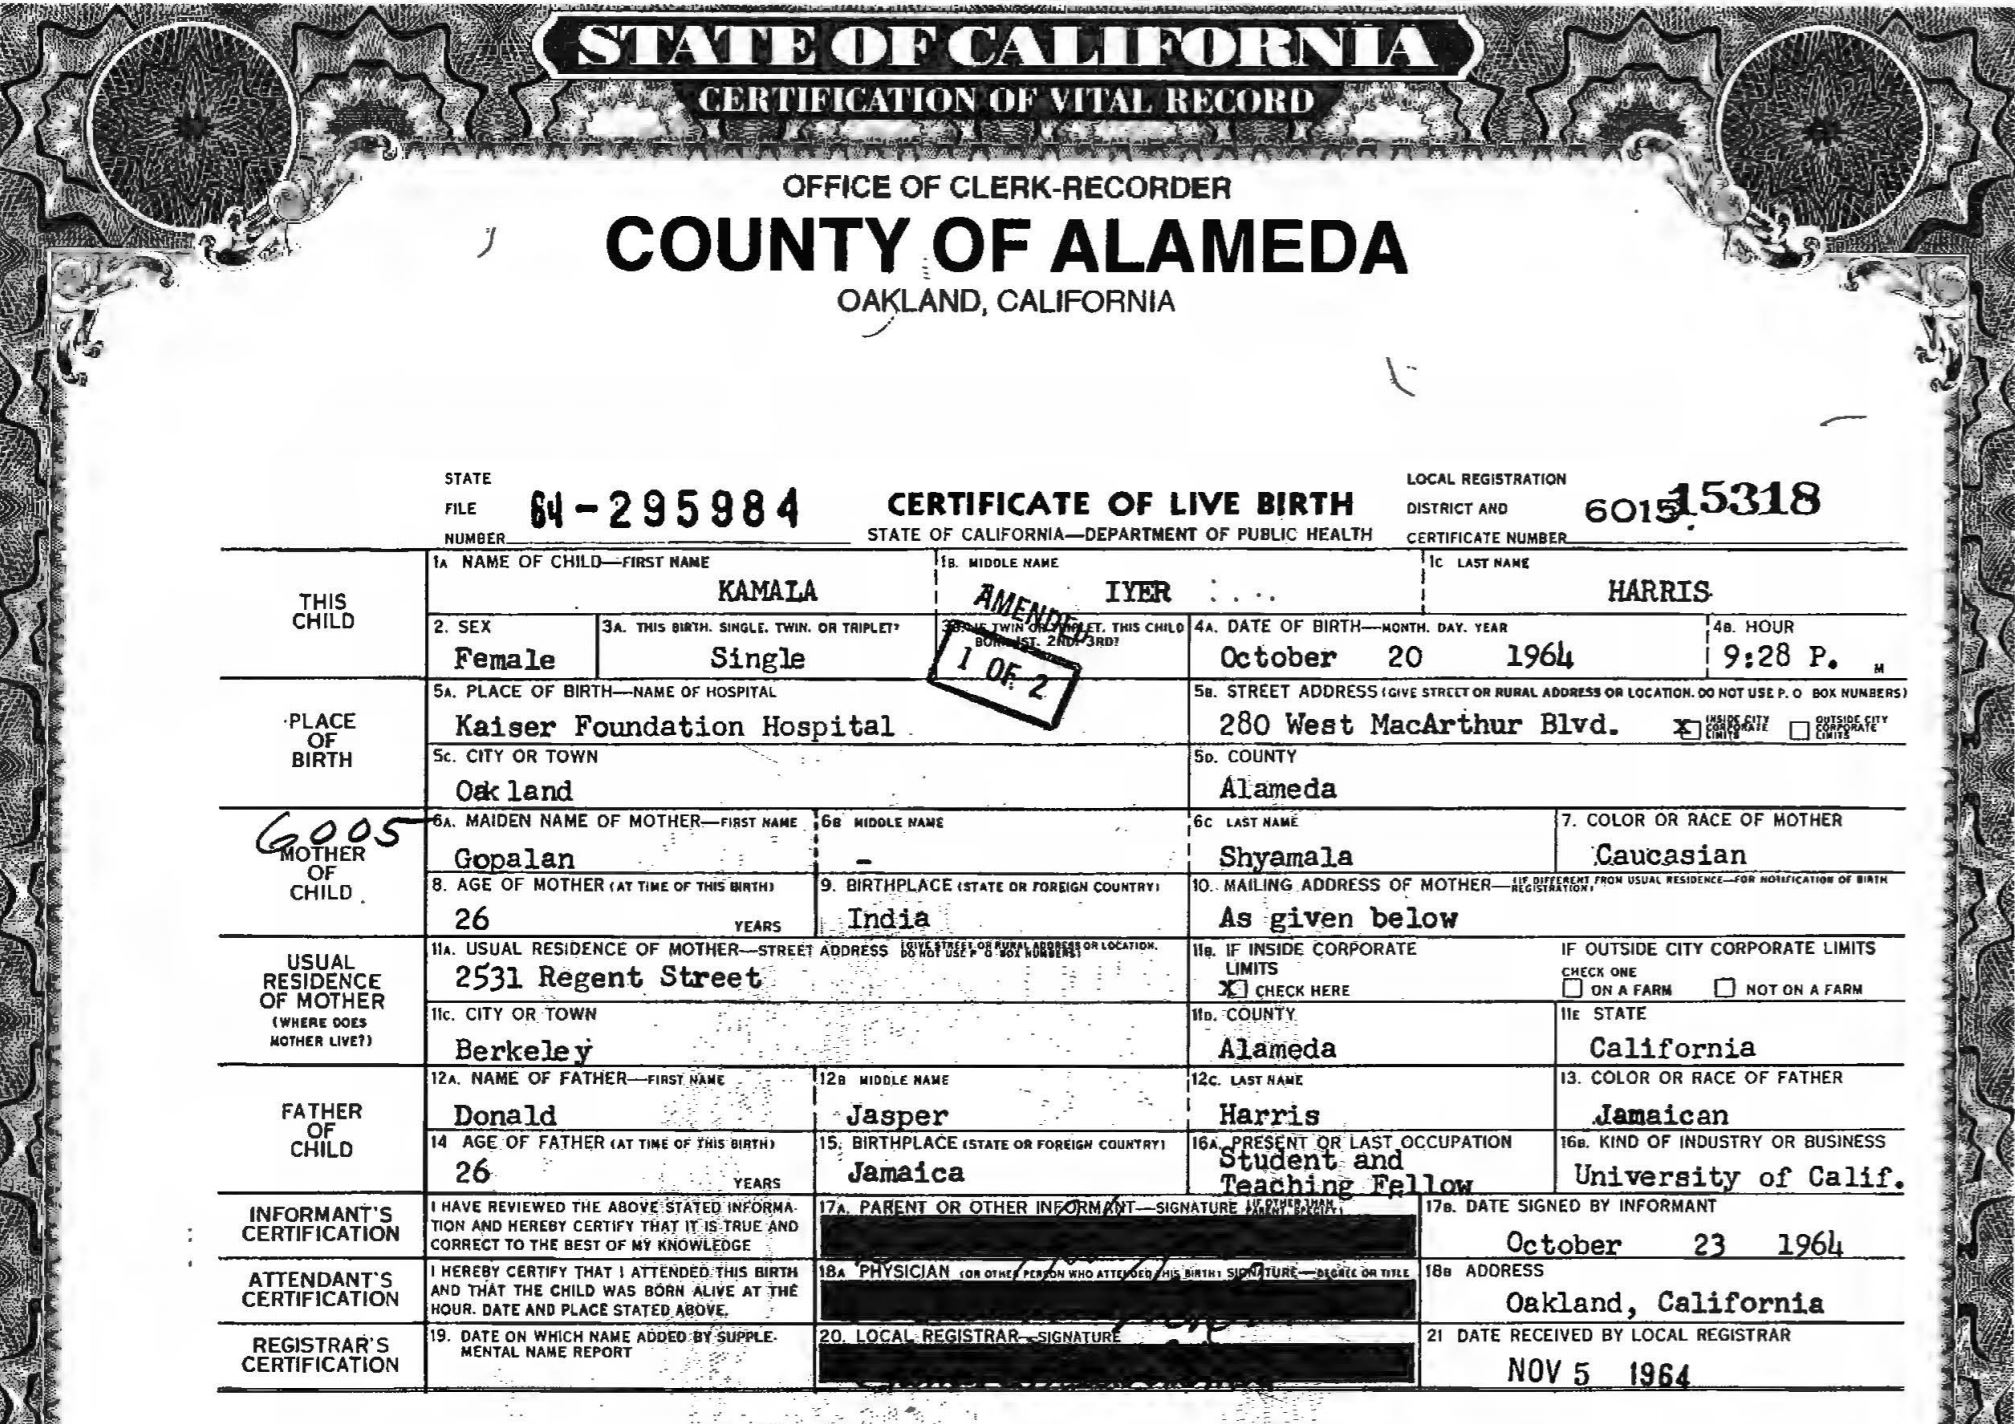 Kamala Devi Harris. (Oct. 20, 1964). Birth Certificate, m. Goplan Shyamala, Caucasian Indian, Age 26, f. Donald Jasper Harris, Age 26, Jamaican, File No. 64-295984, Alameda Cty. Oakland, CA.